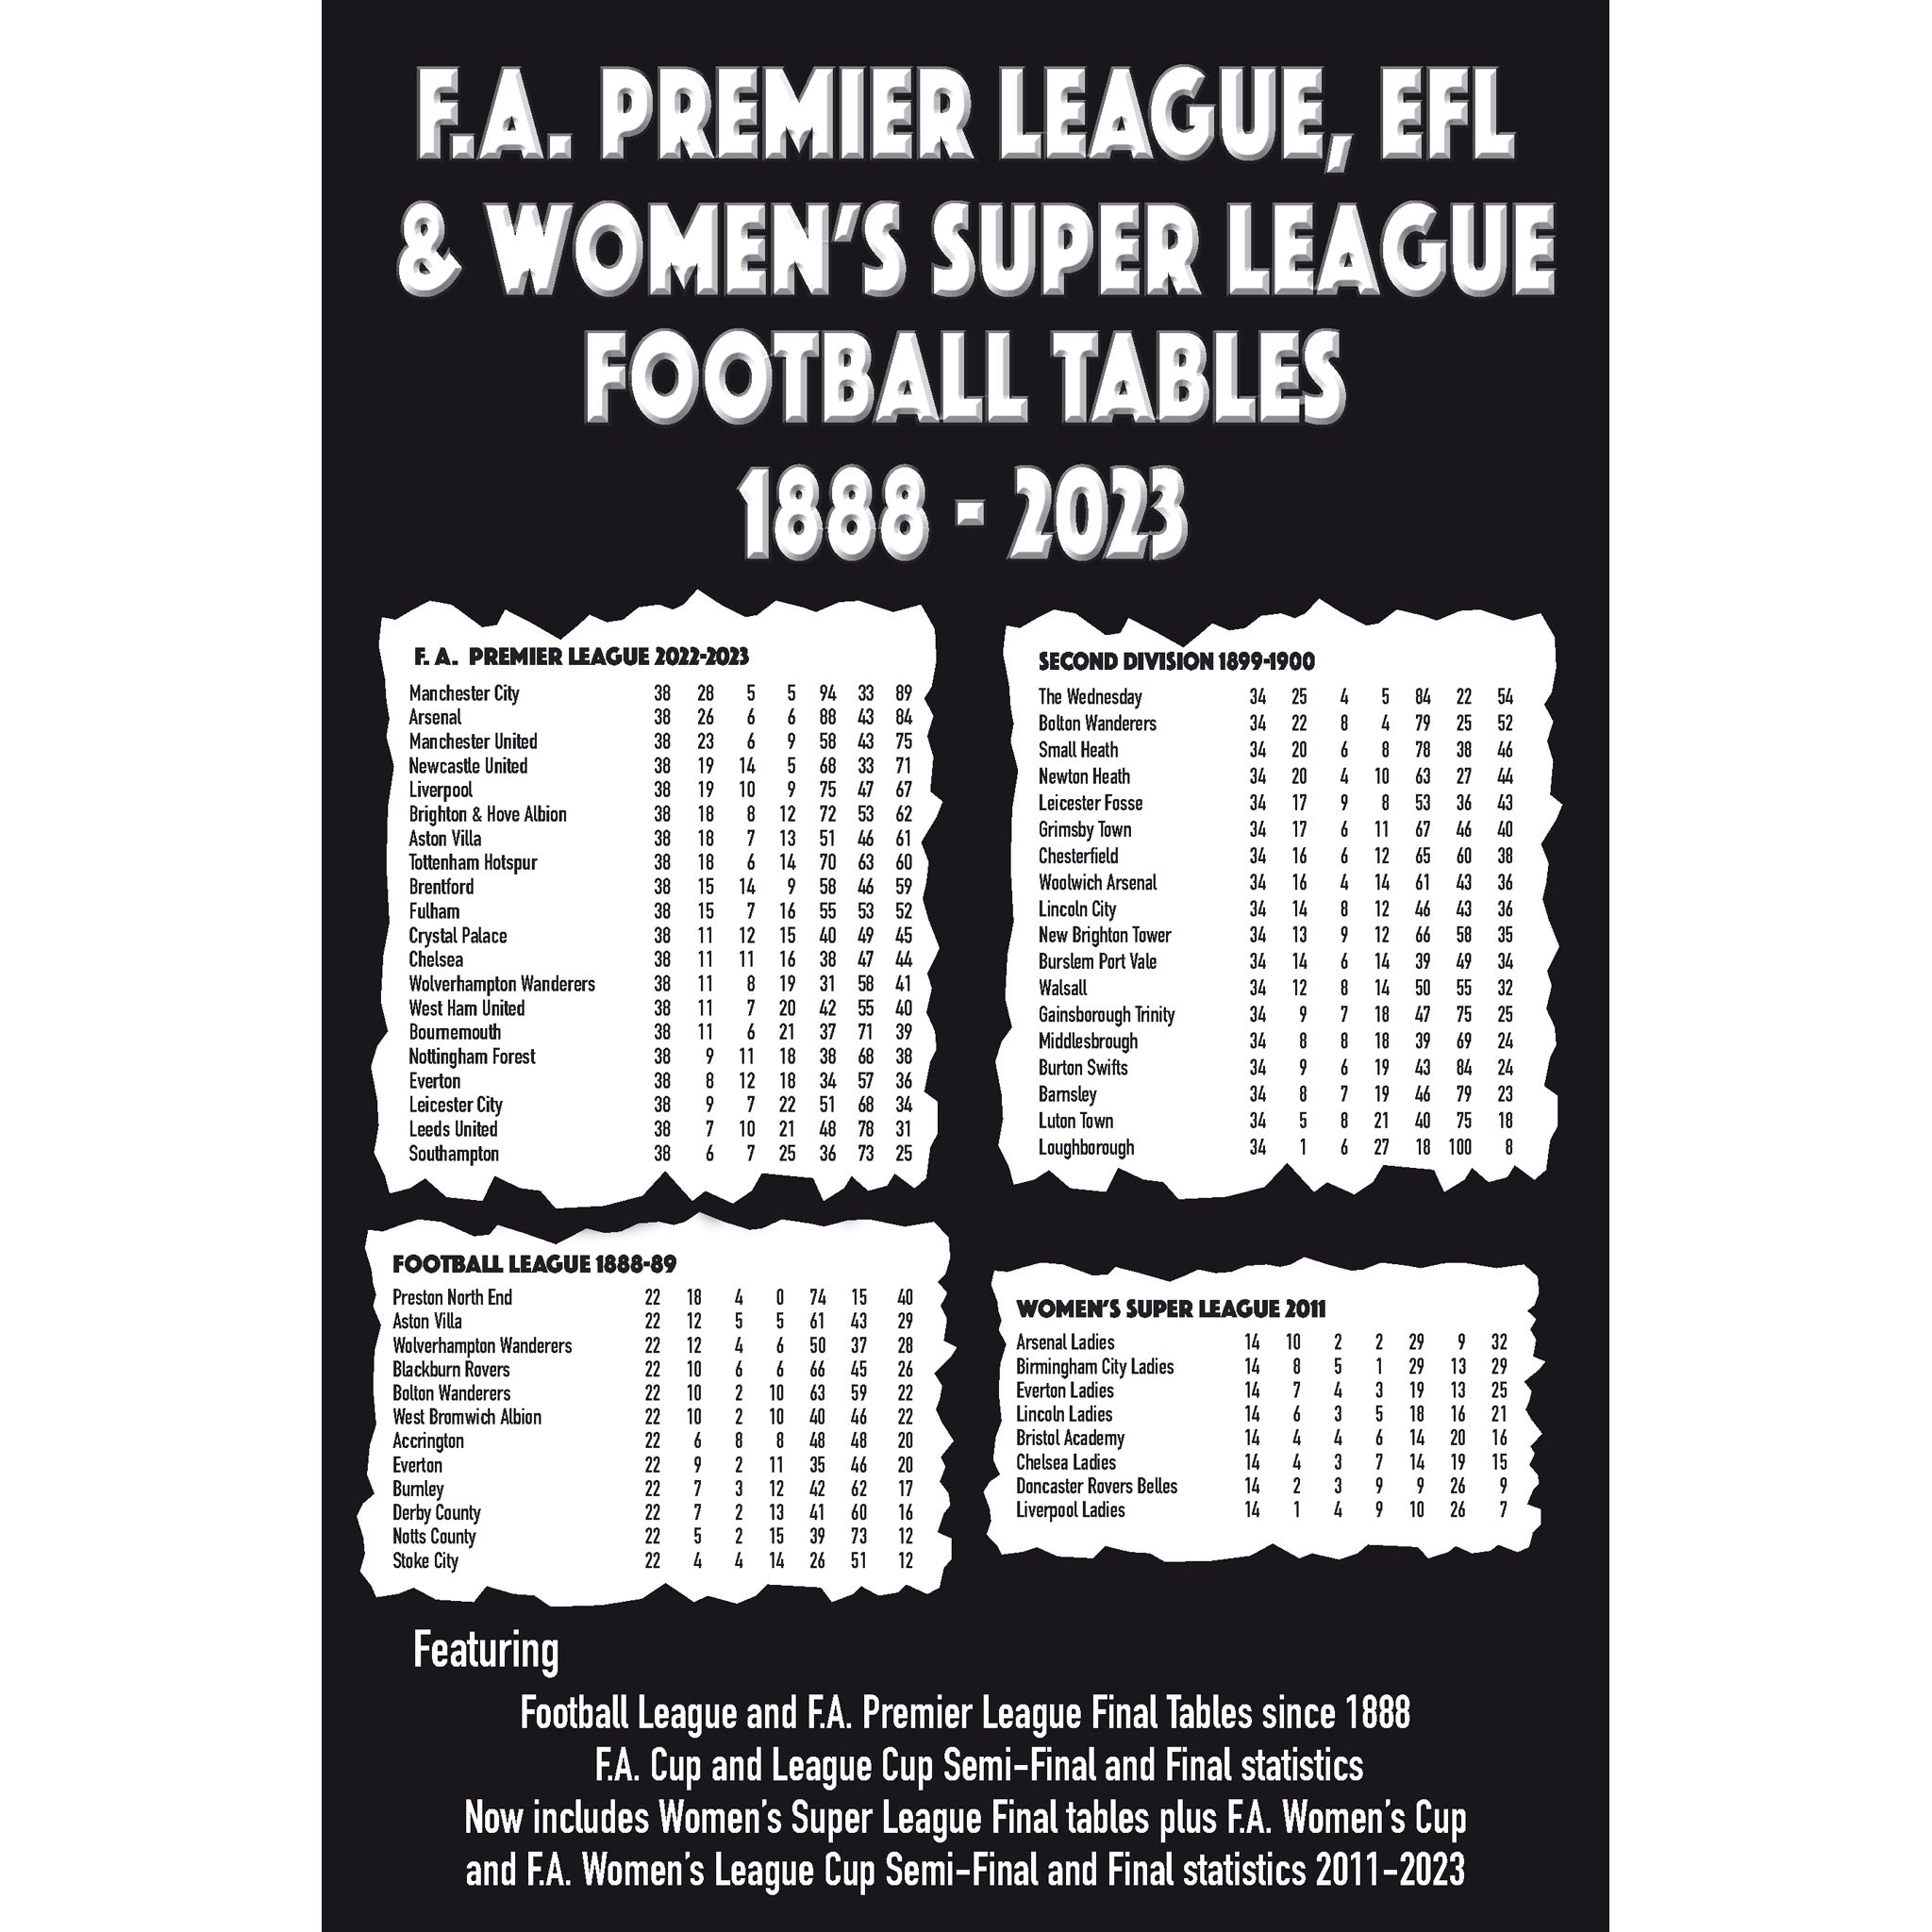 Football League Tables series